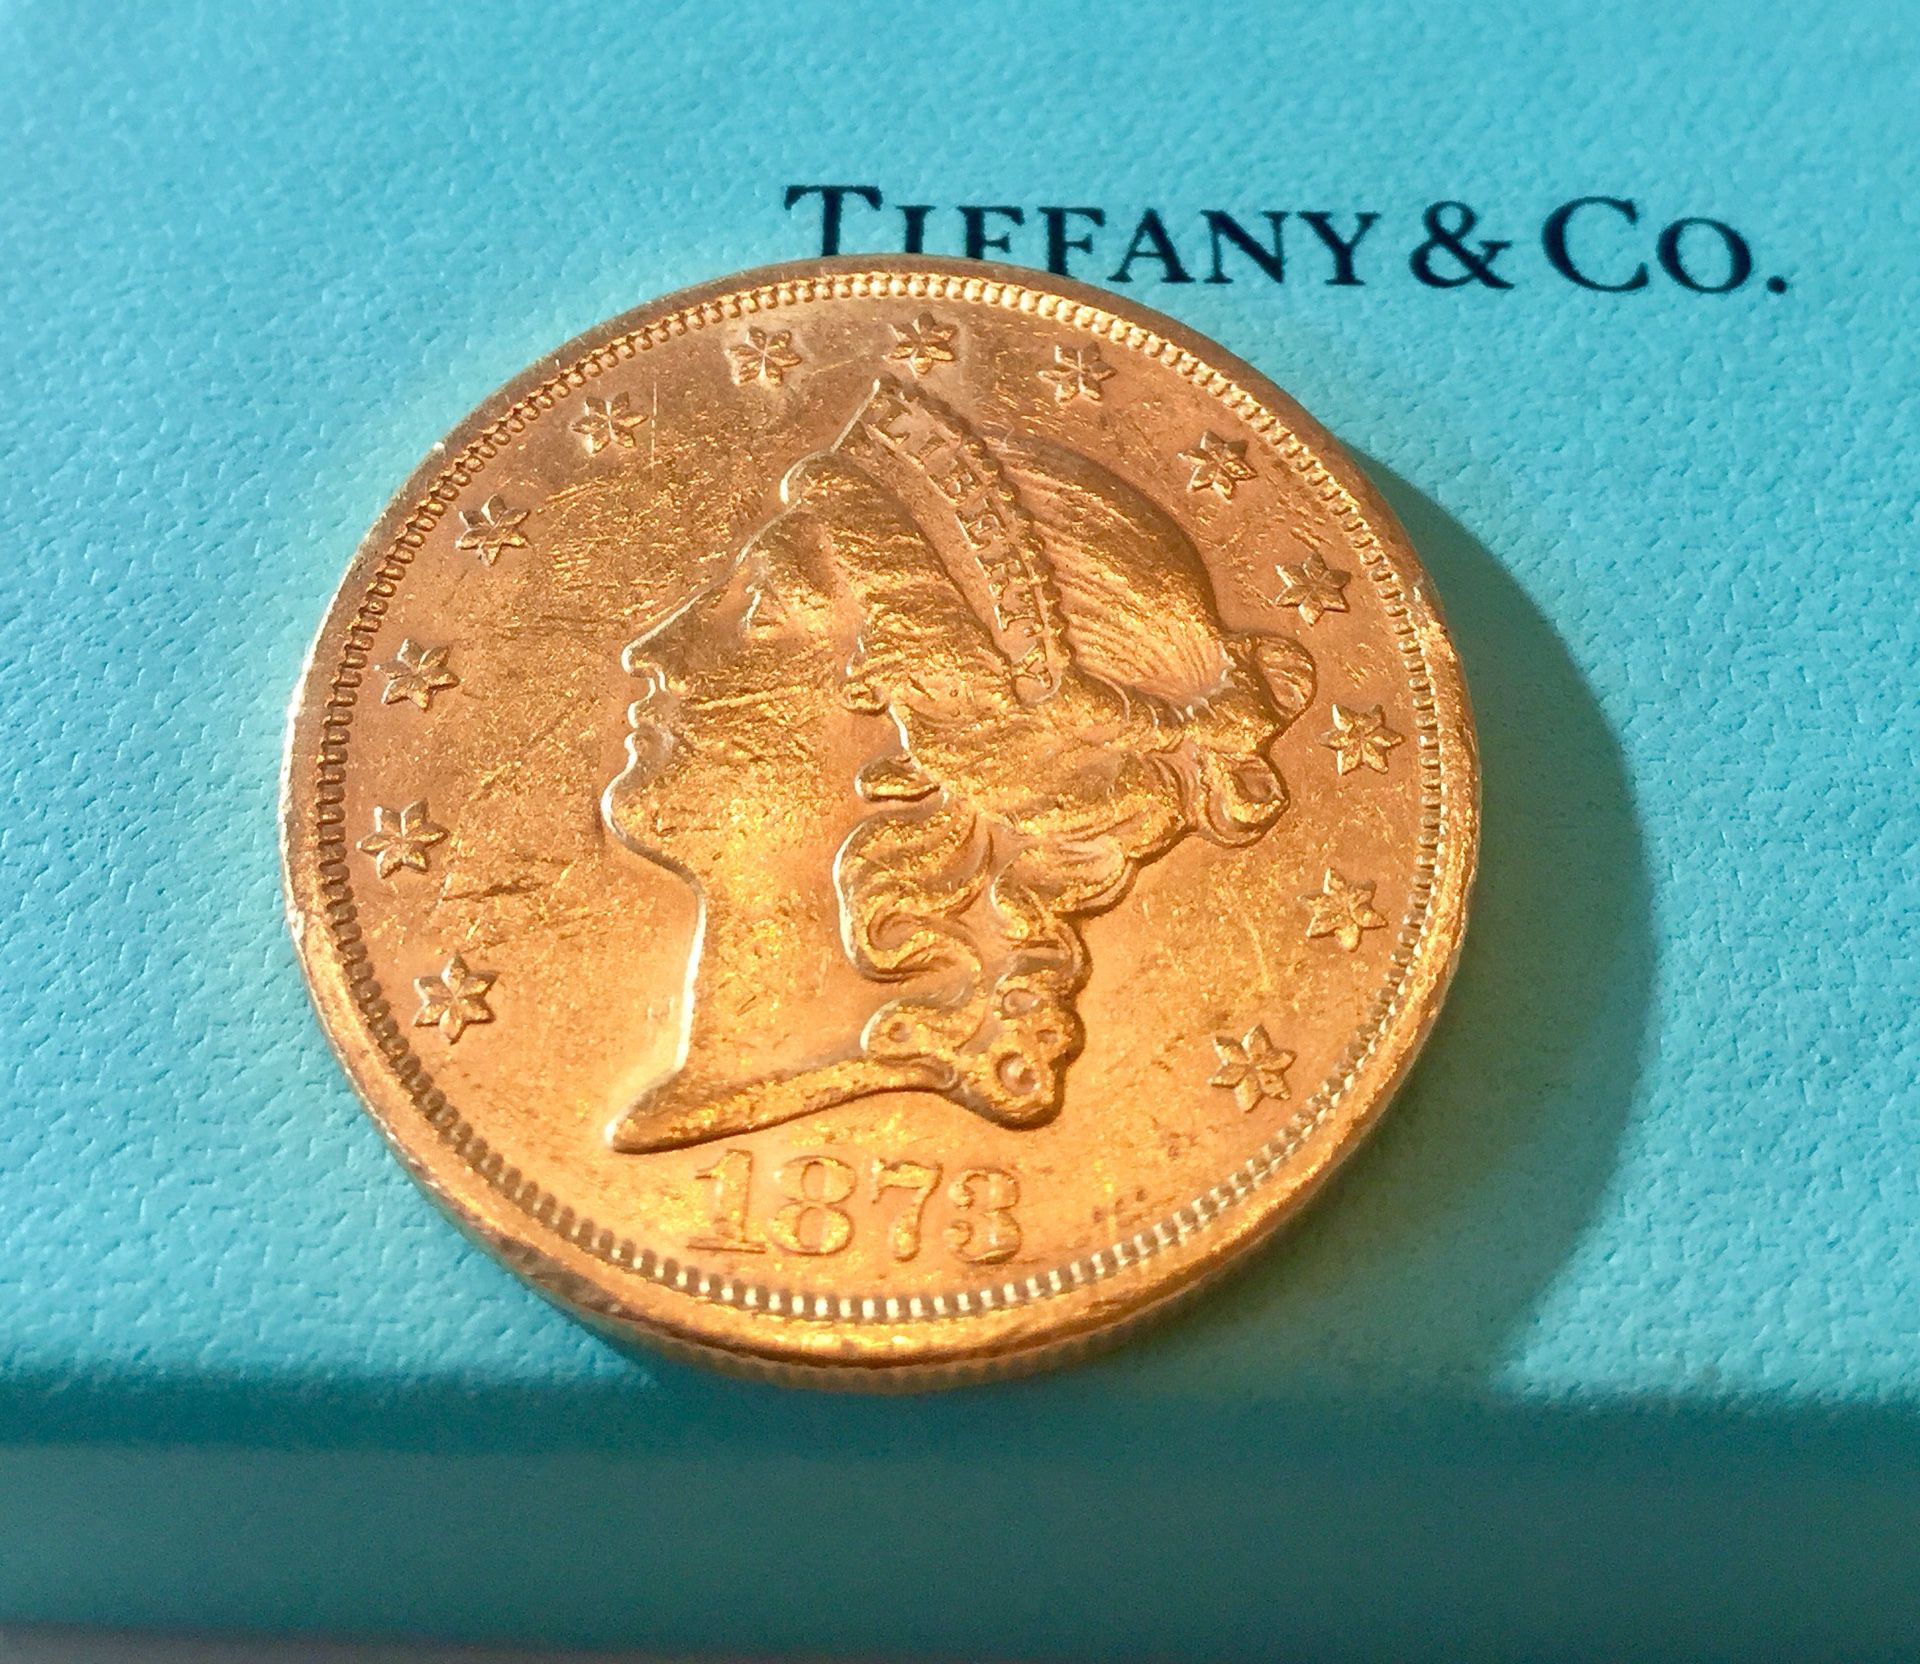 $20 gold coin